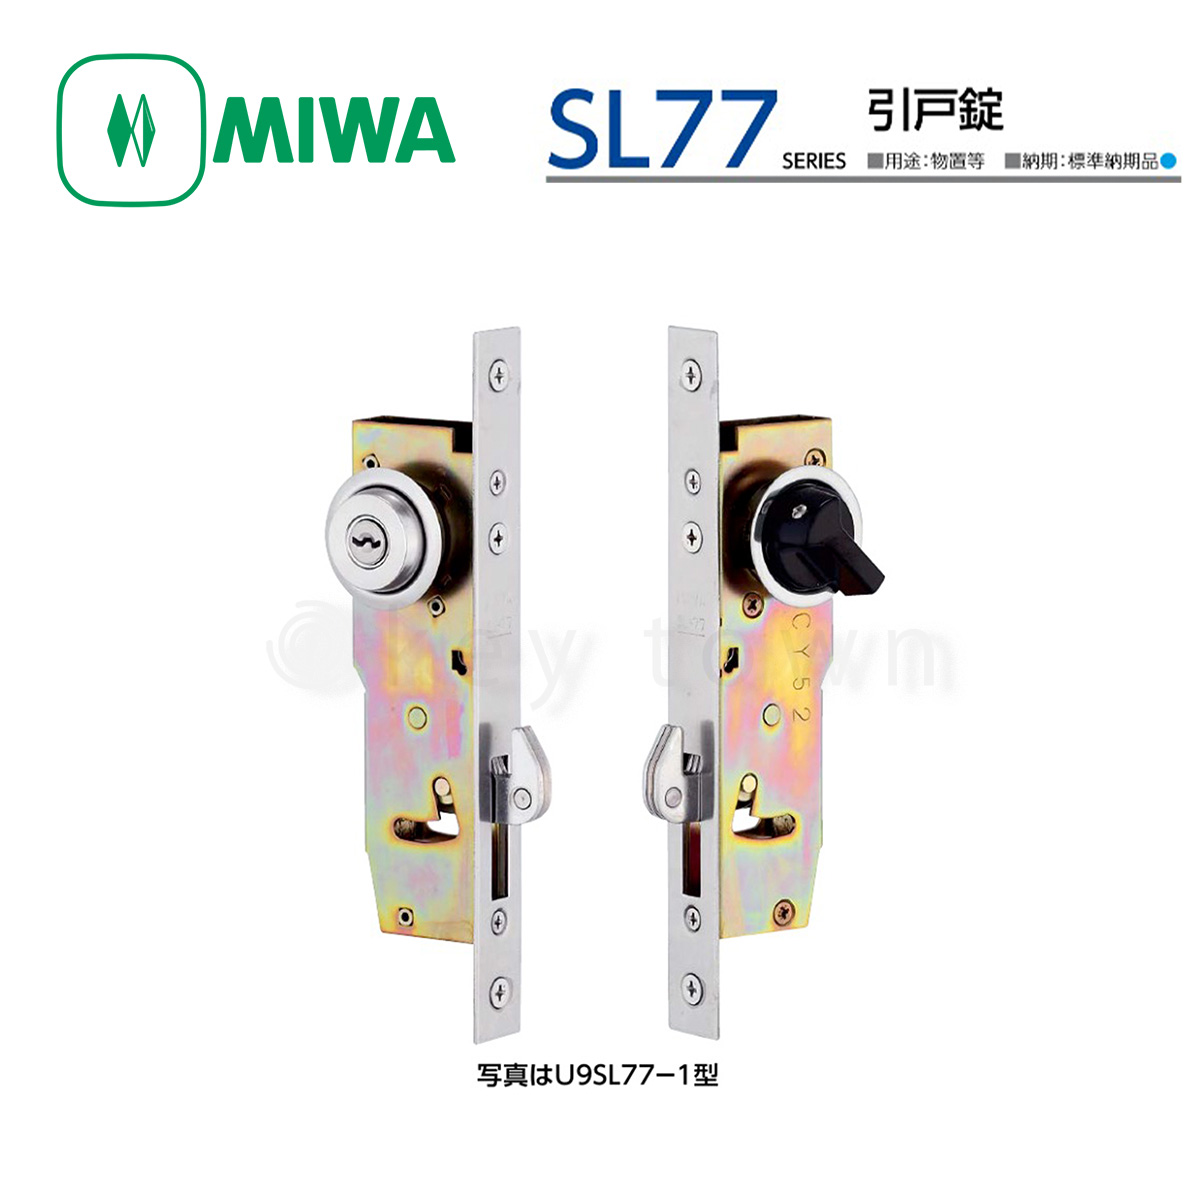 MIWA 【美和ロック】 静音引戸鎌錠  [MIWA-SL77] U9SL77-1型